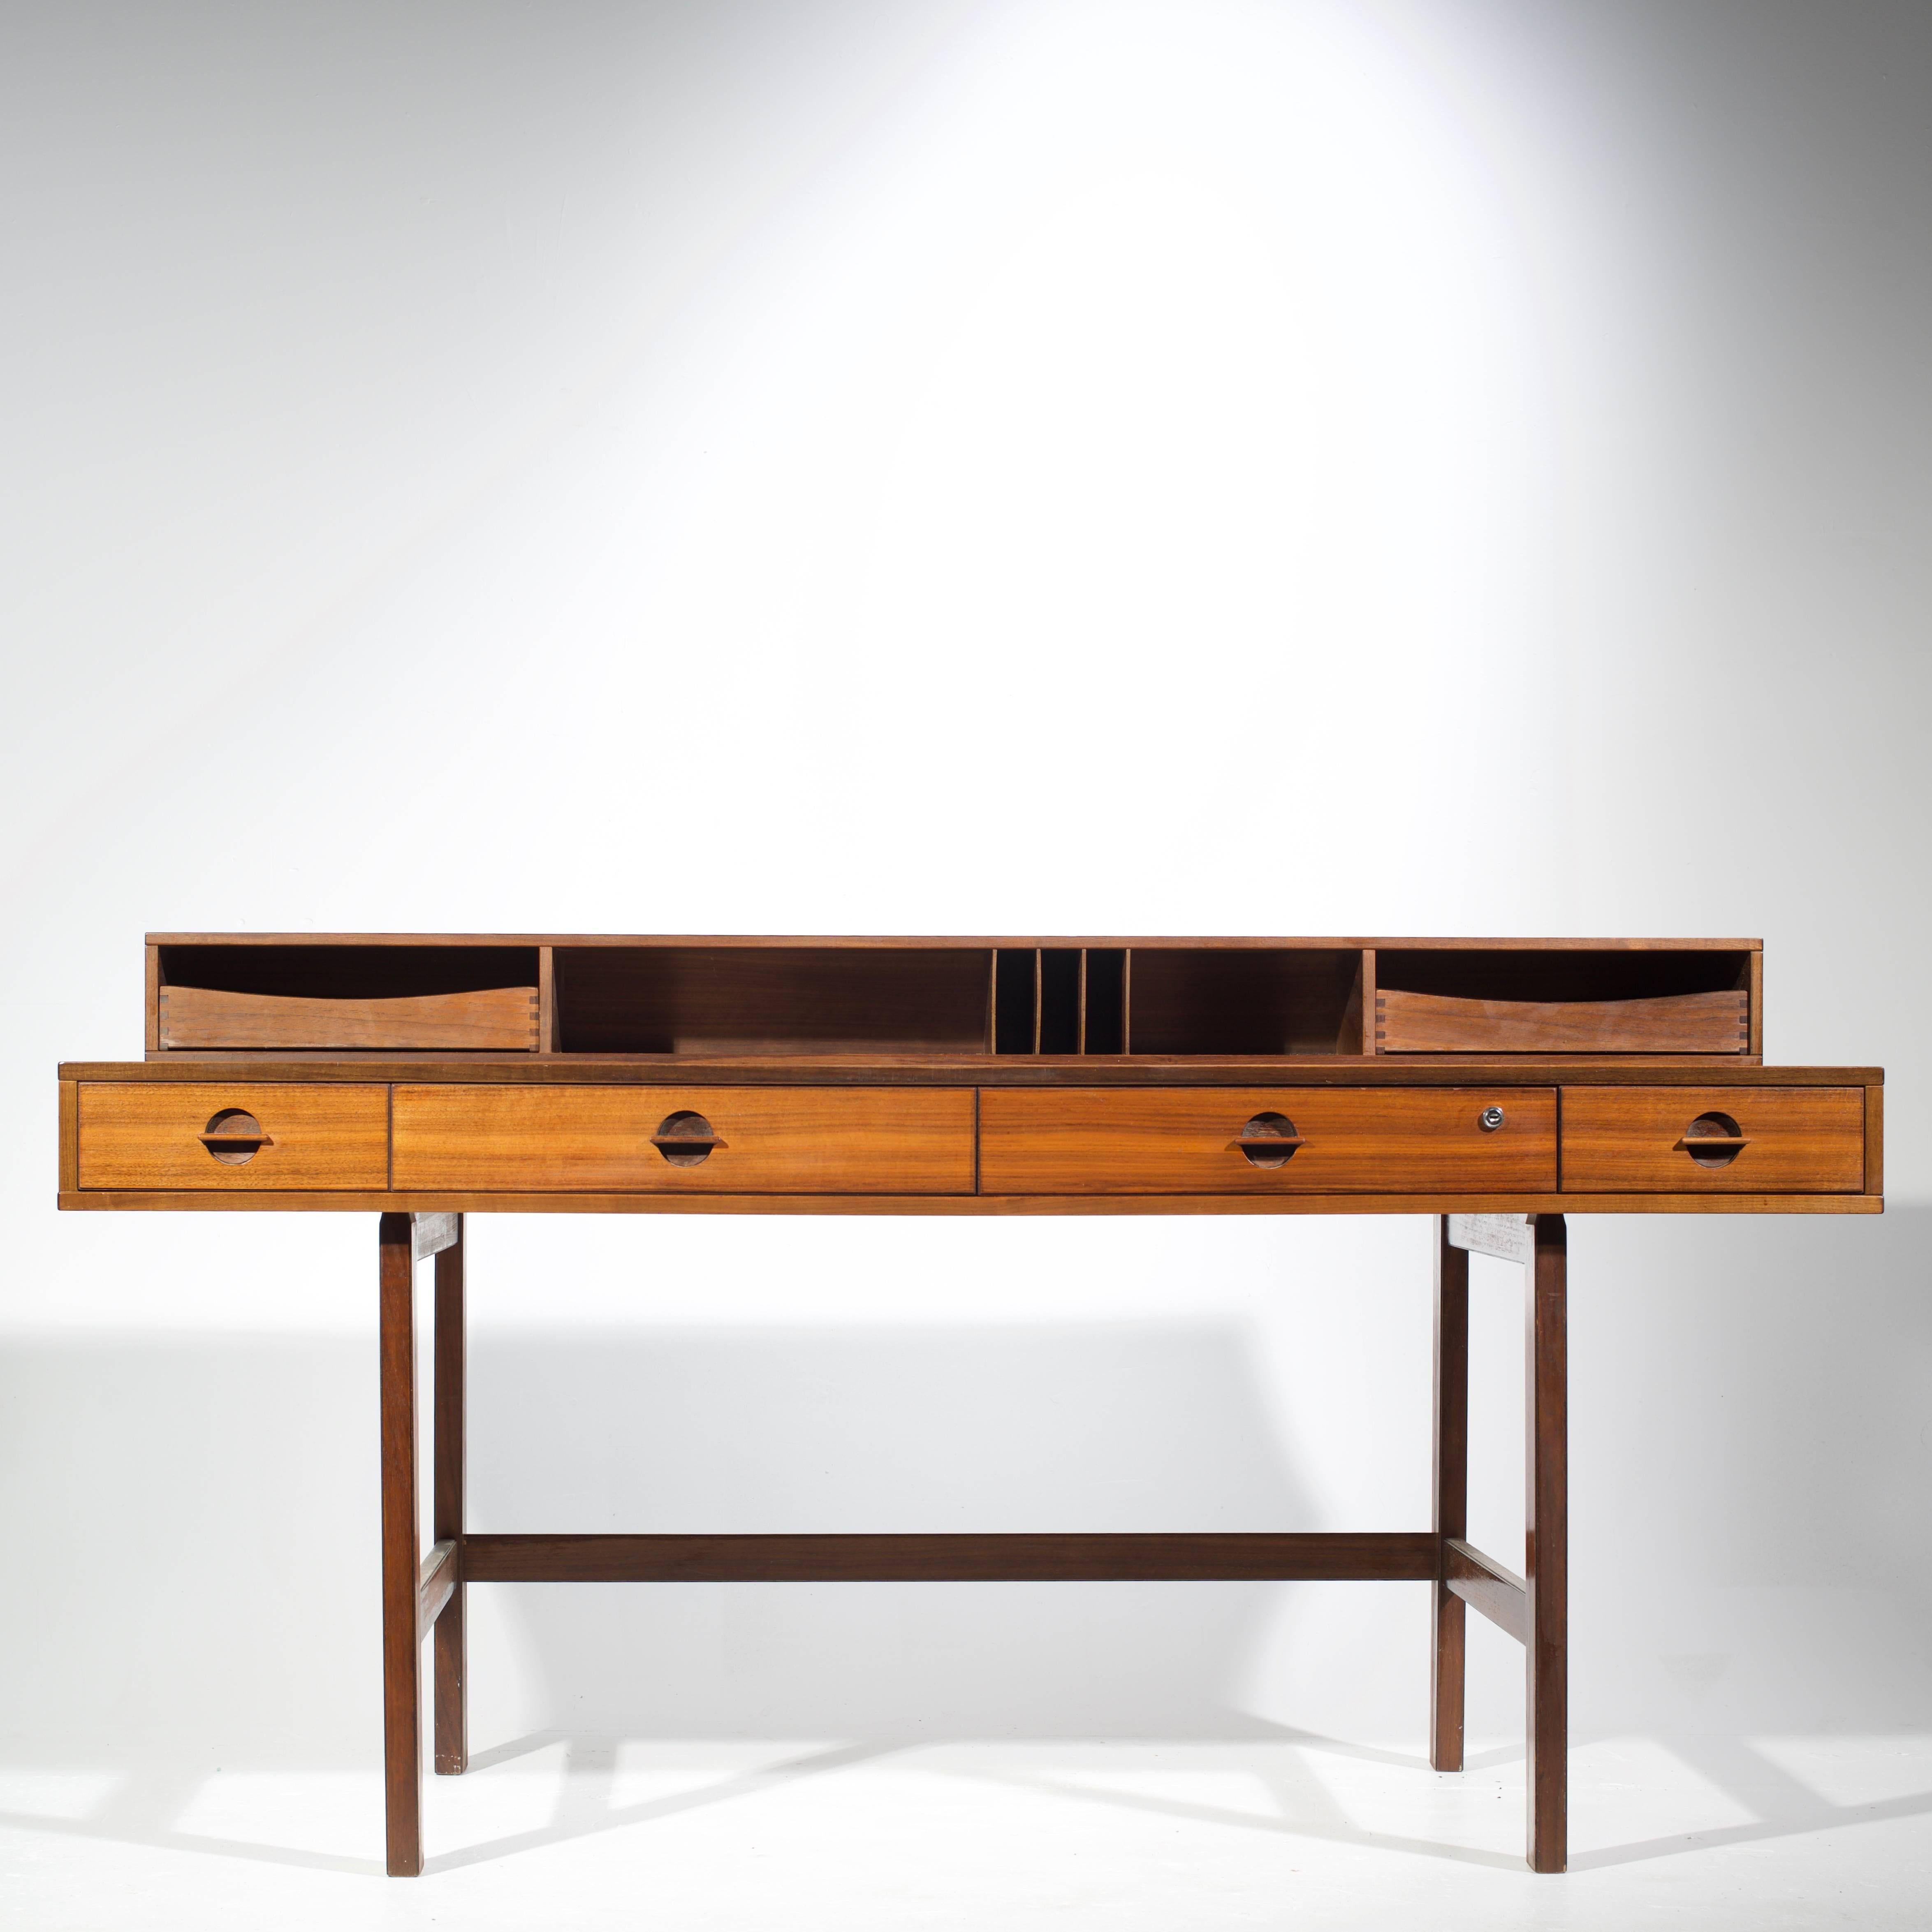 An expansive and expandable Danish modern walnut executive partners desk designed by Jens Quistgaard of Dansk for Peter Løvig Nielsen.